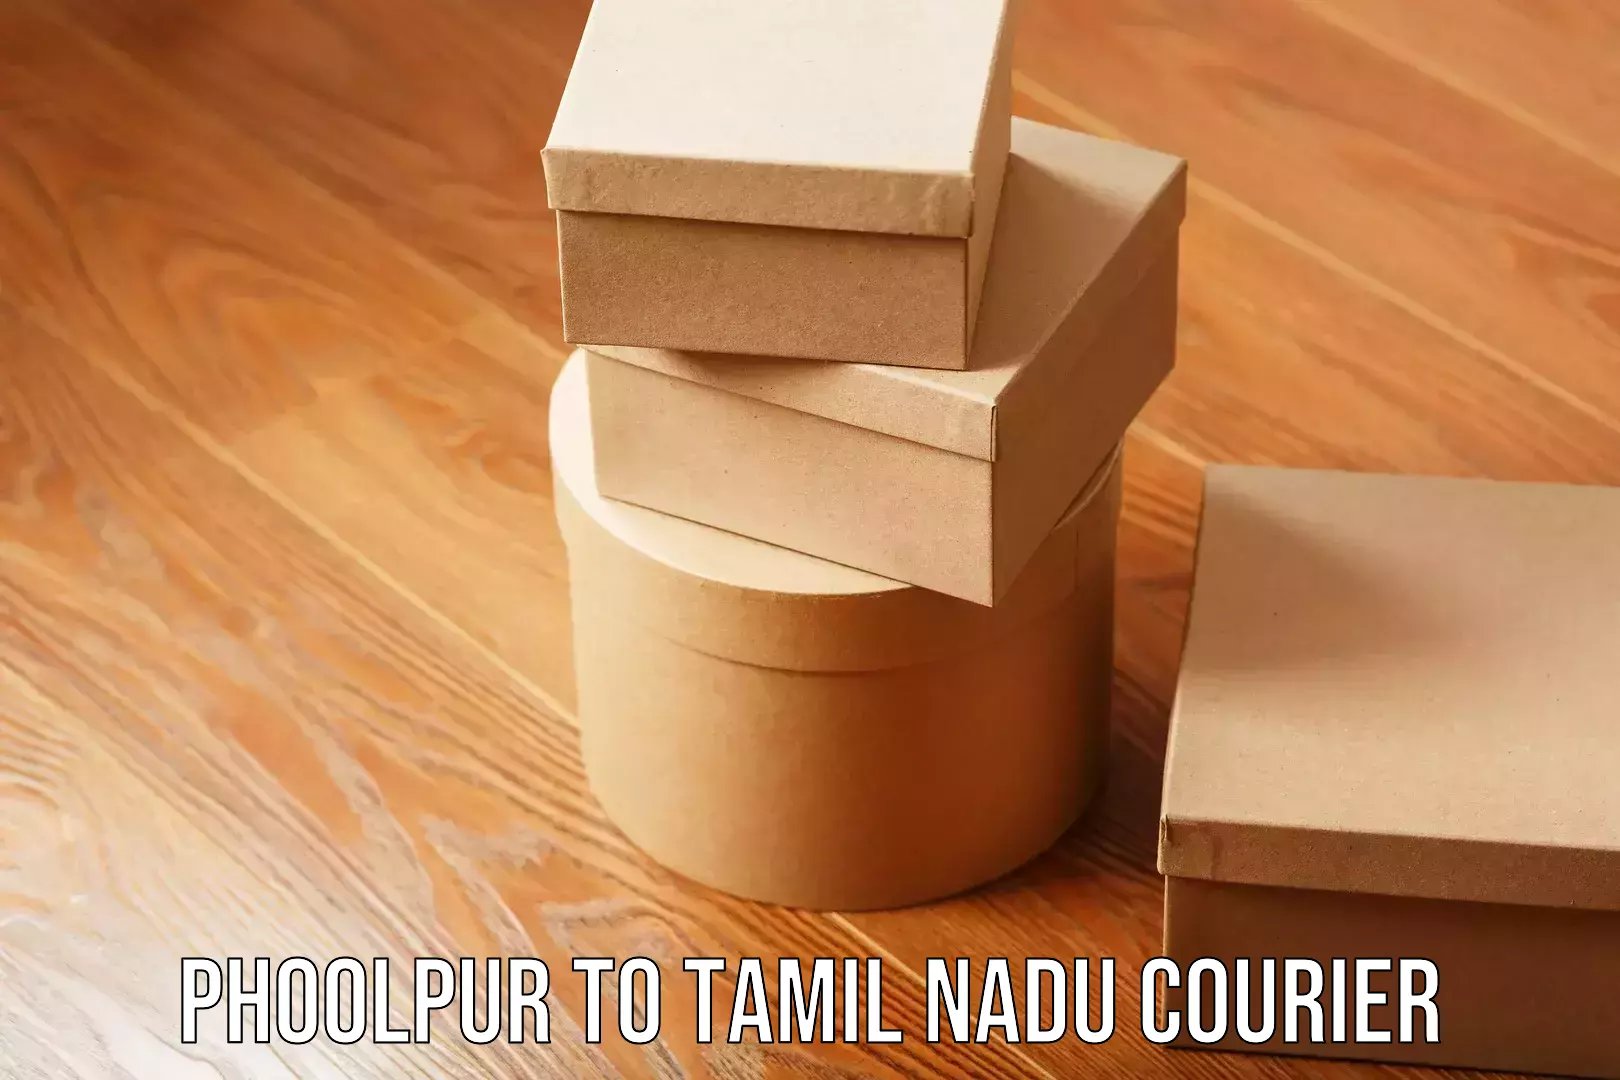 Trusted moving company Phoolpur to Tamil Nadu